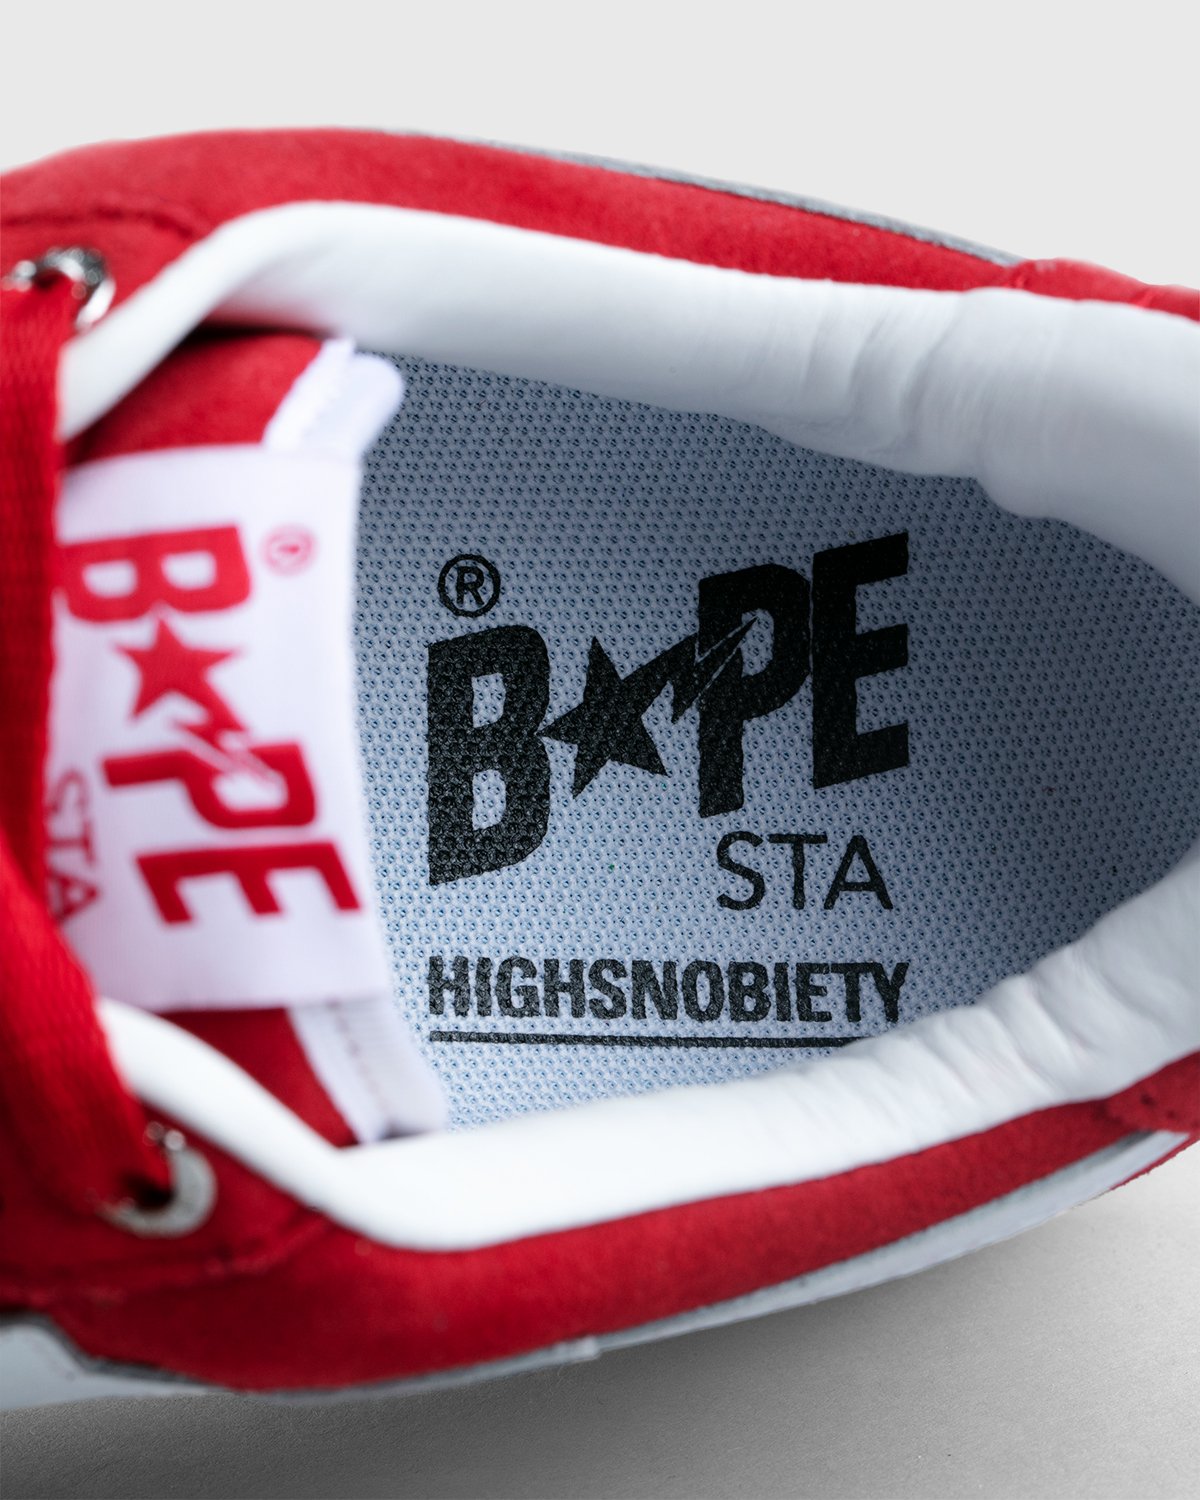 BAPE x Highsnobiety - BAPE STA Red - Footwear - Red - Image 8